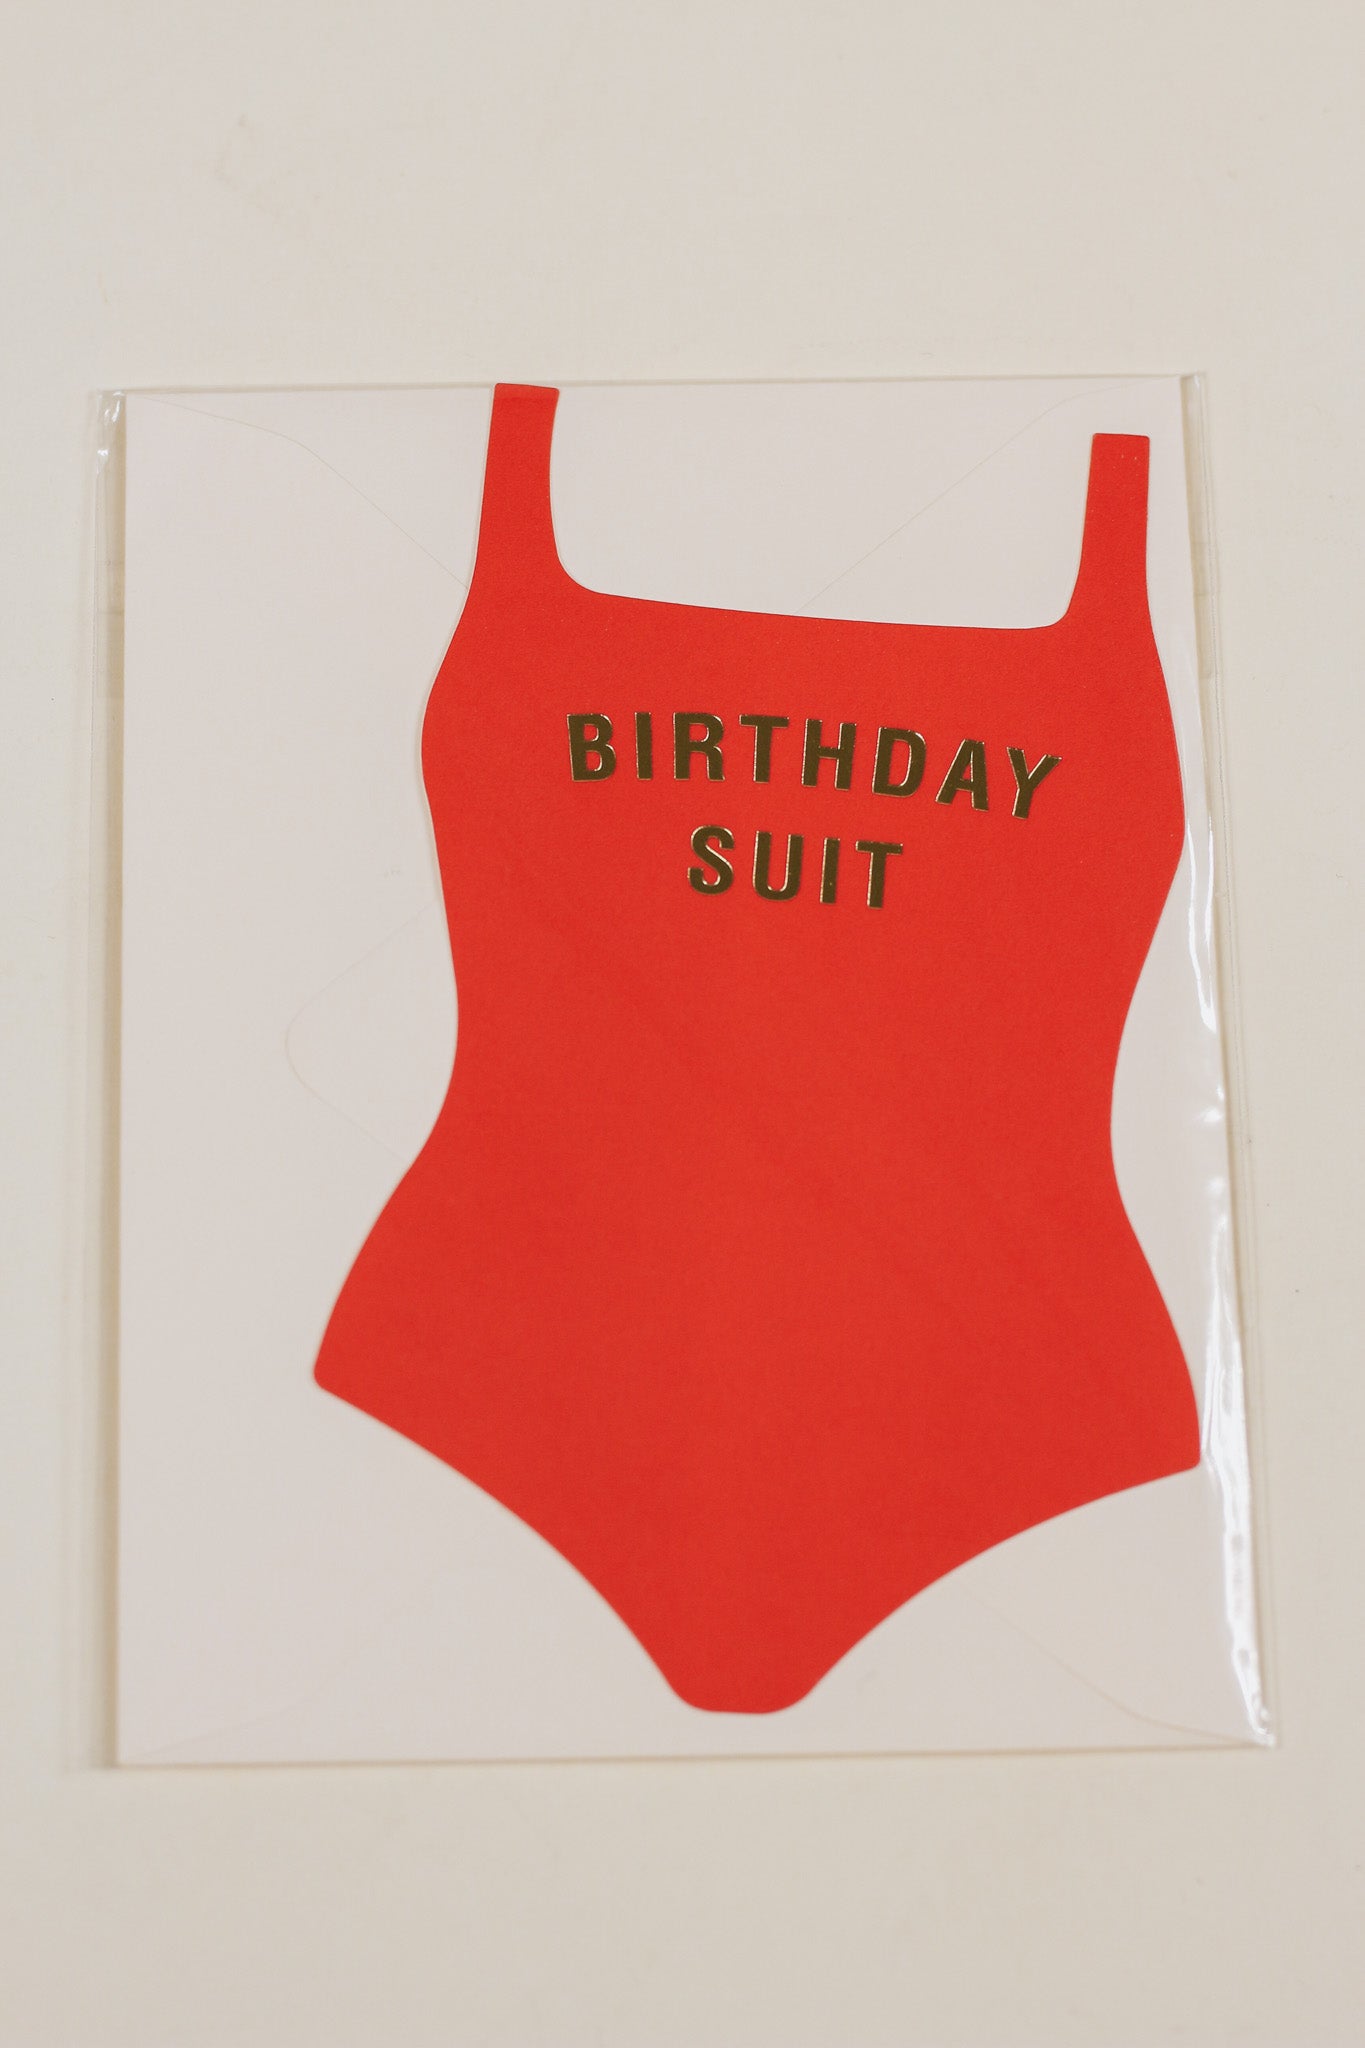 Birthday Suit Flat Greeting Card